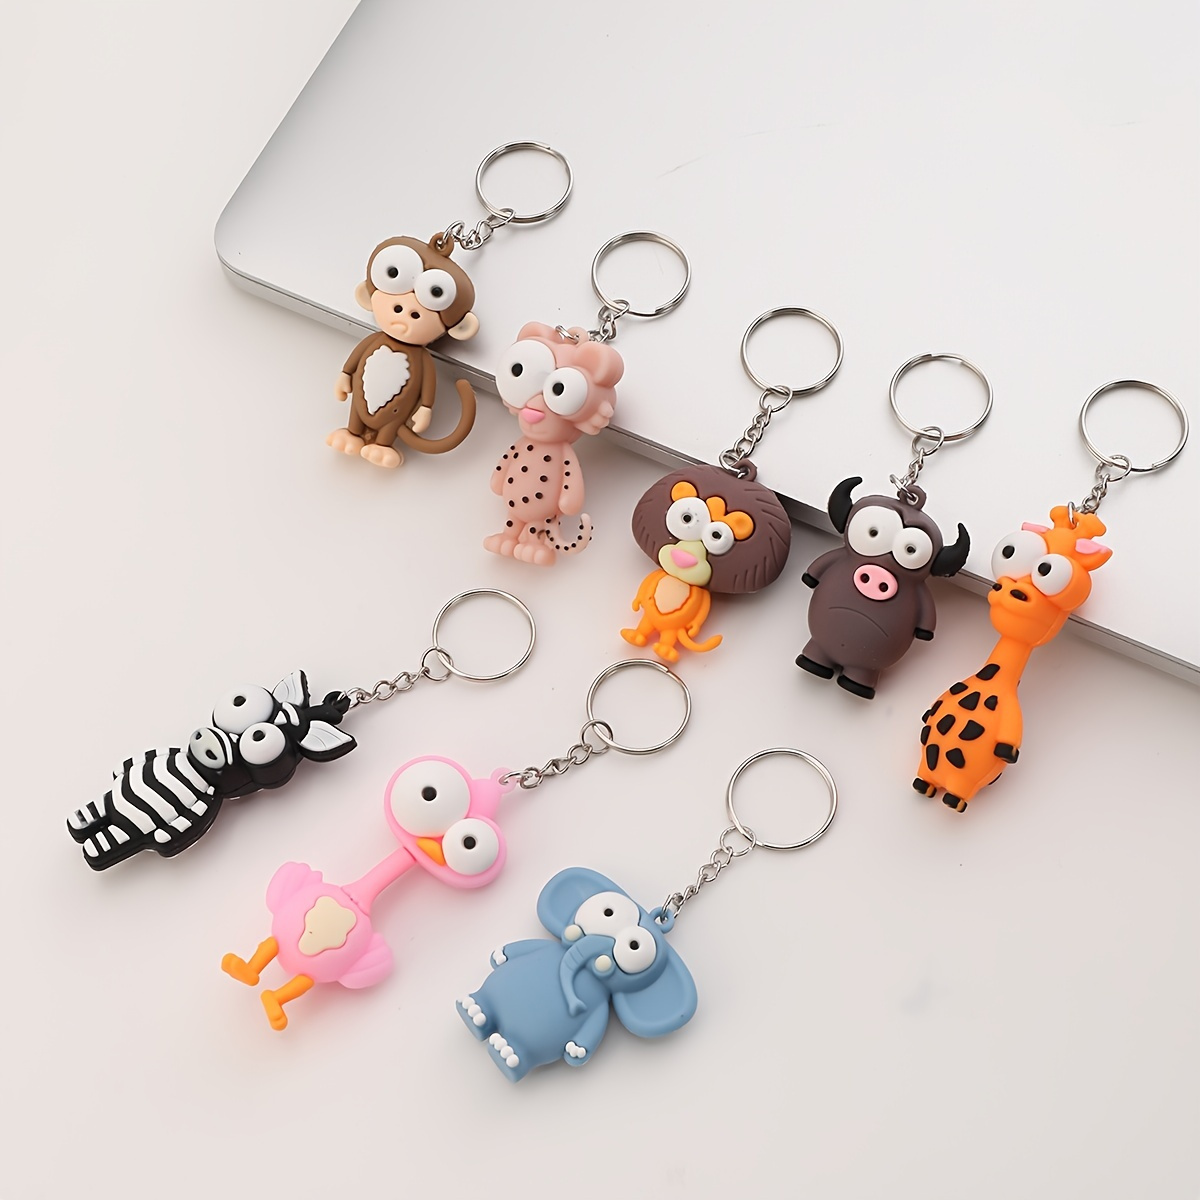 

8pcs Big Eye Animal Keychain Creative Pvc Elephant Monkey Cow Deer Pendant Fashion Bag Key Accessories Key Chain